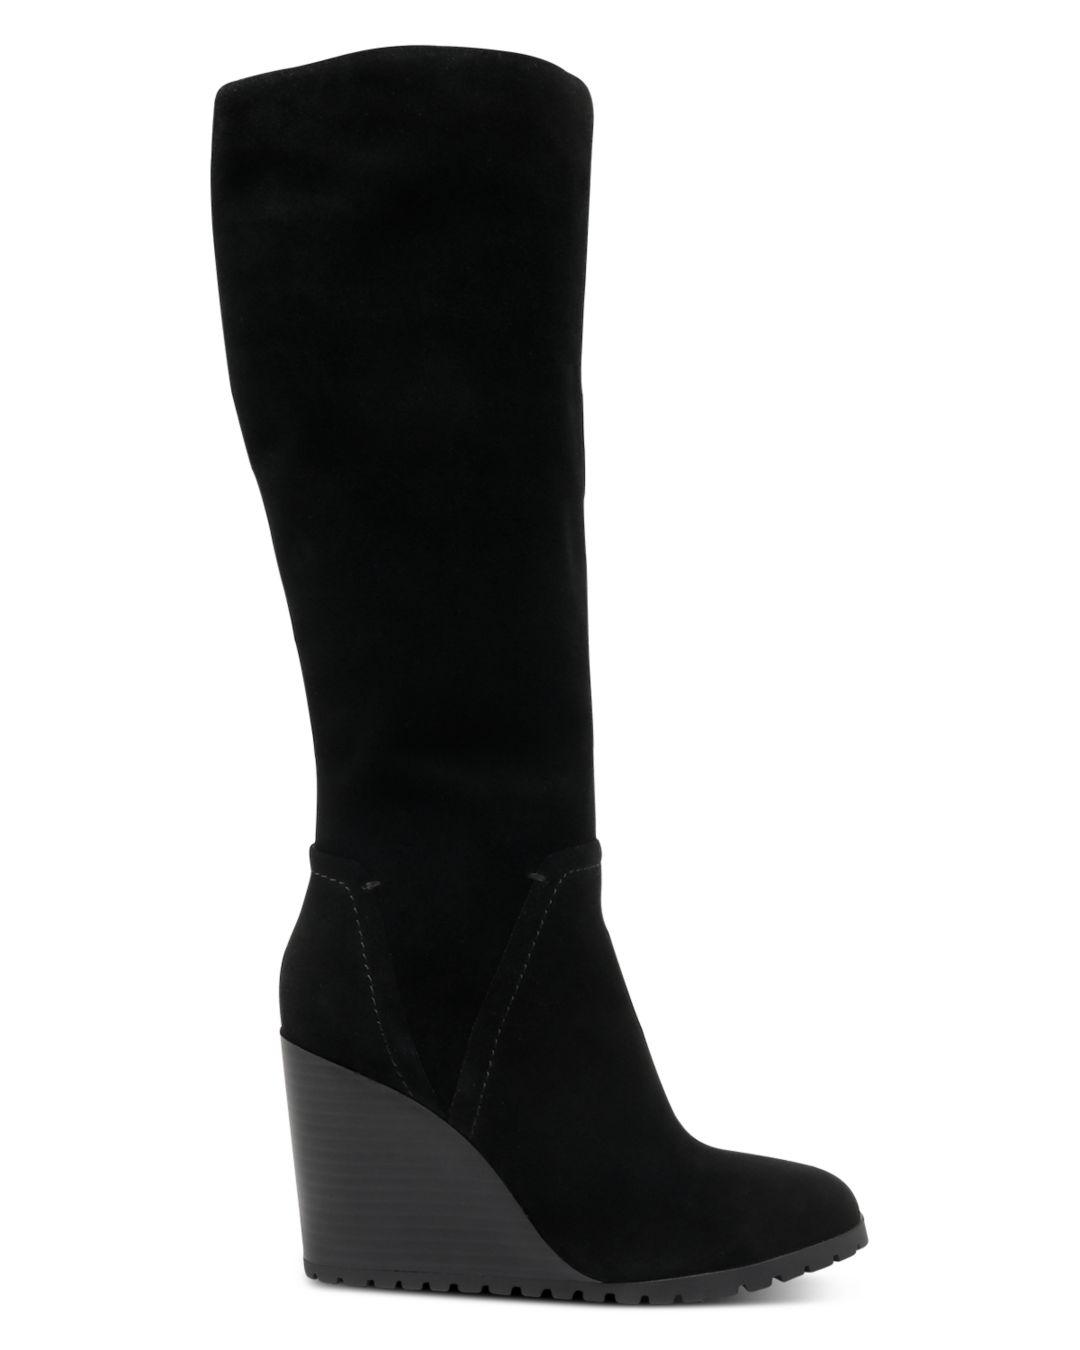 Splendid Suede Women's Patience Wedge Heel Tall Boots in Black Suede (Black)  - Lyst